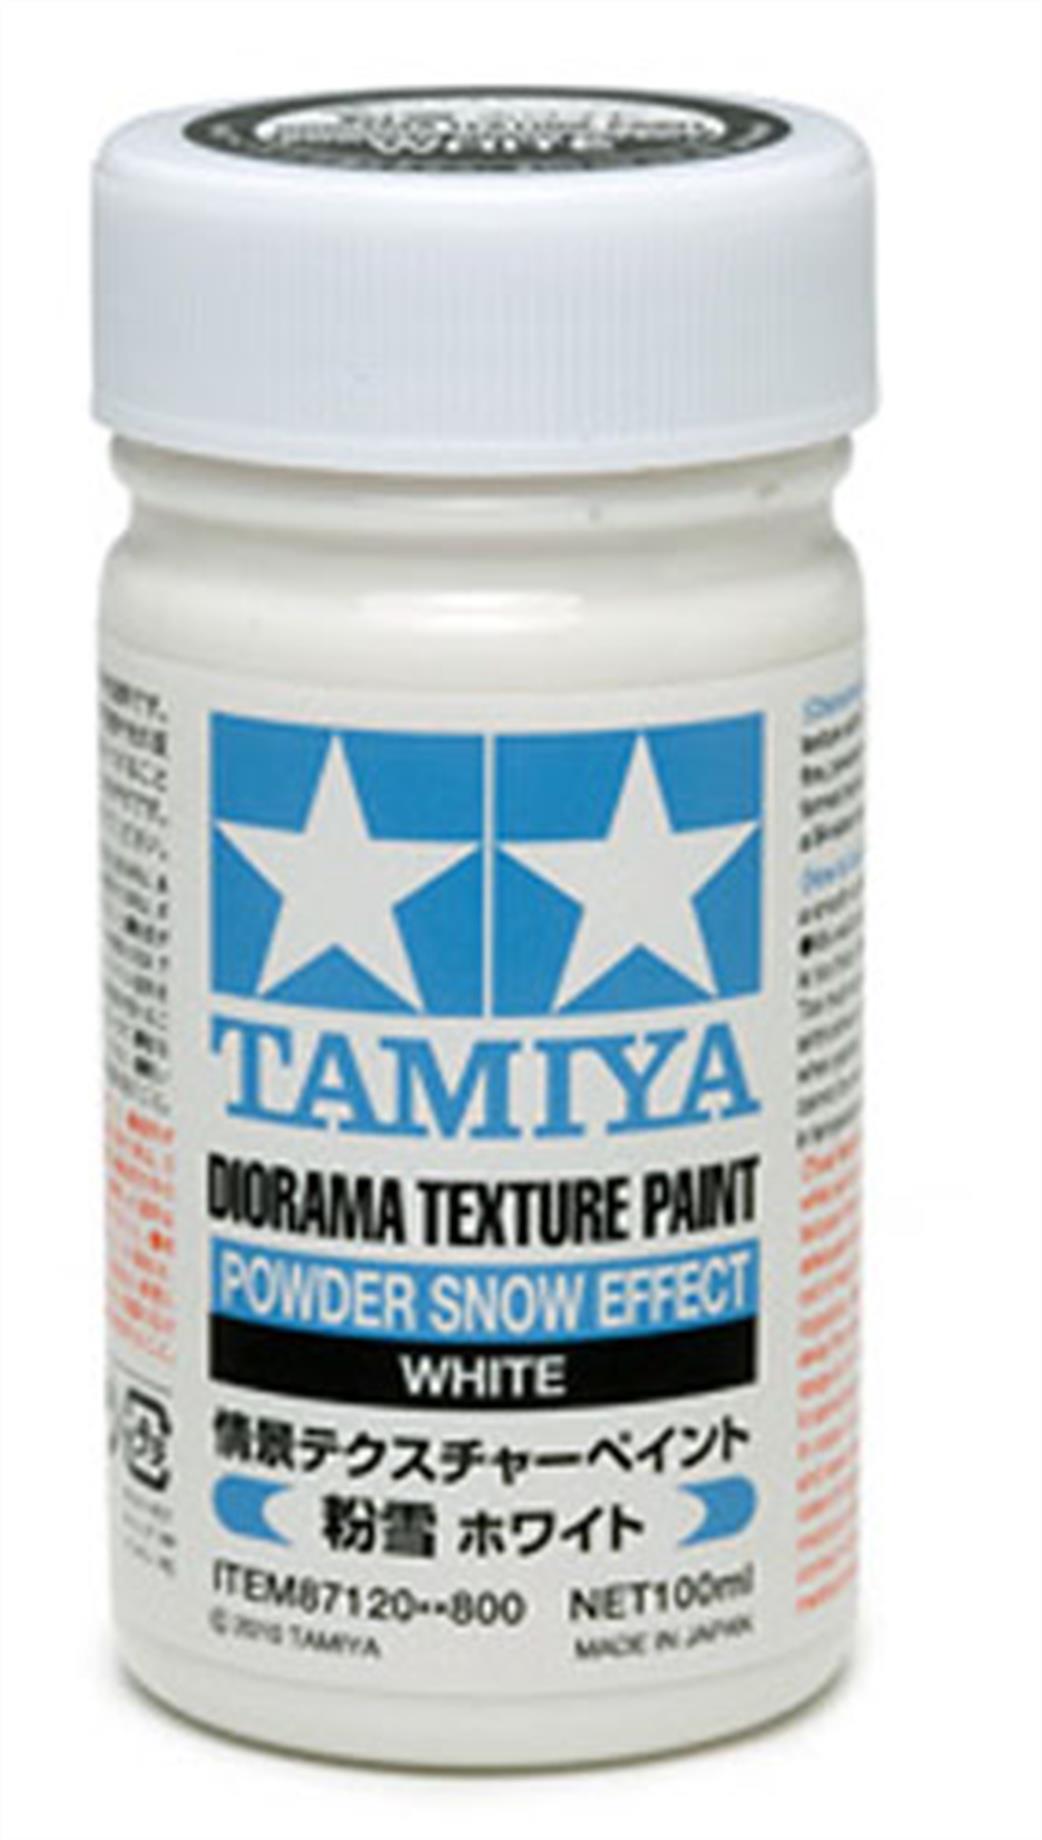 Tamiya  87120 Powder Snow Textured Paint